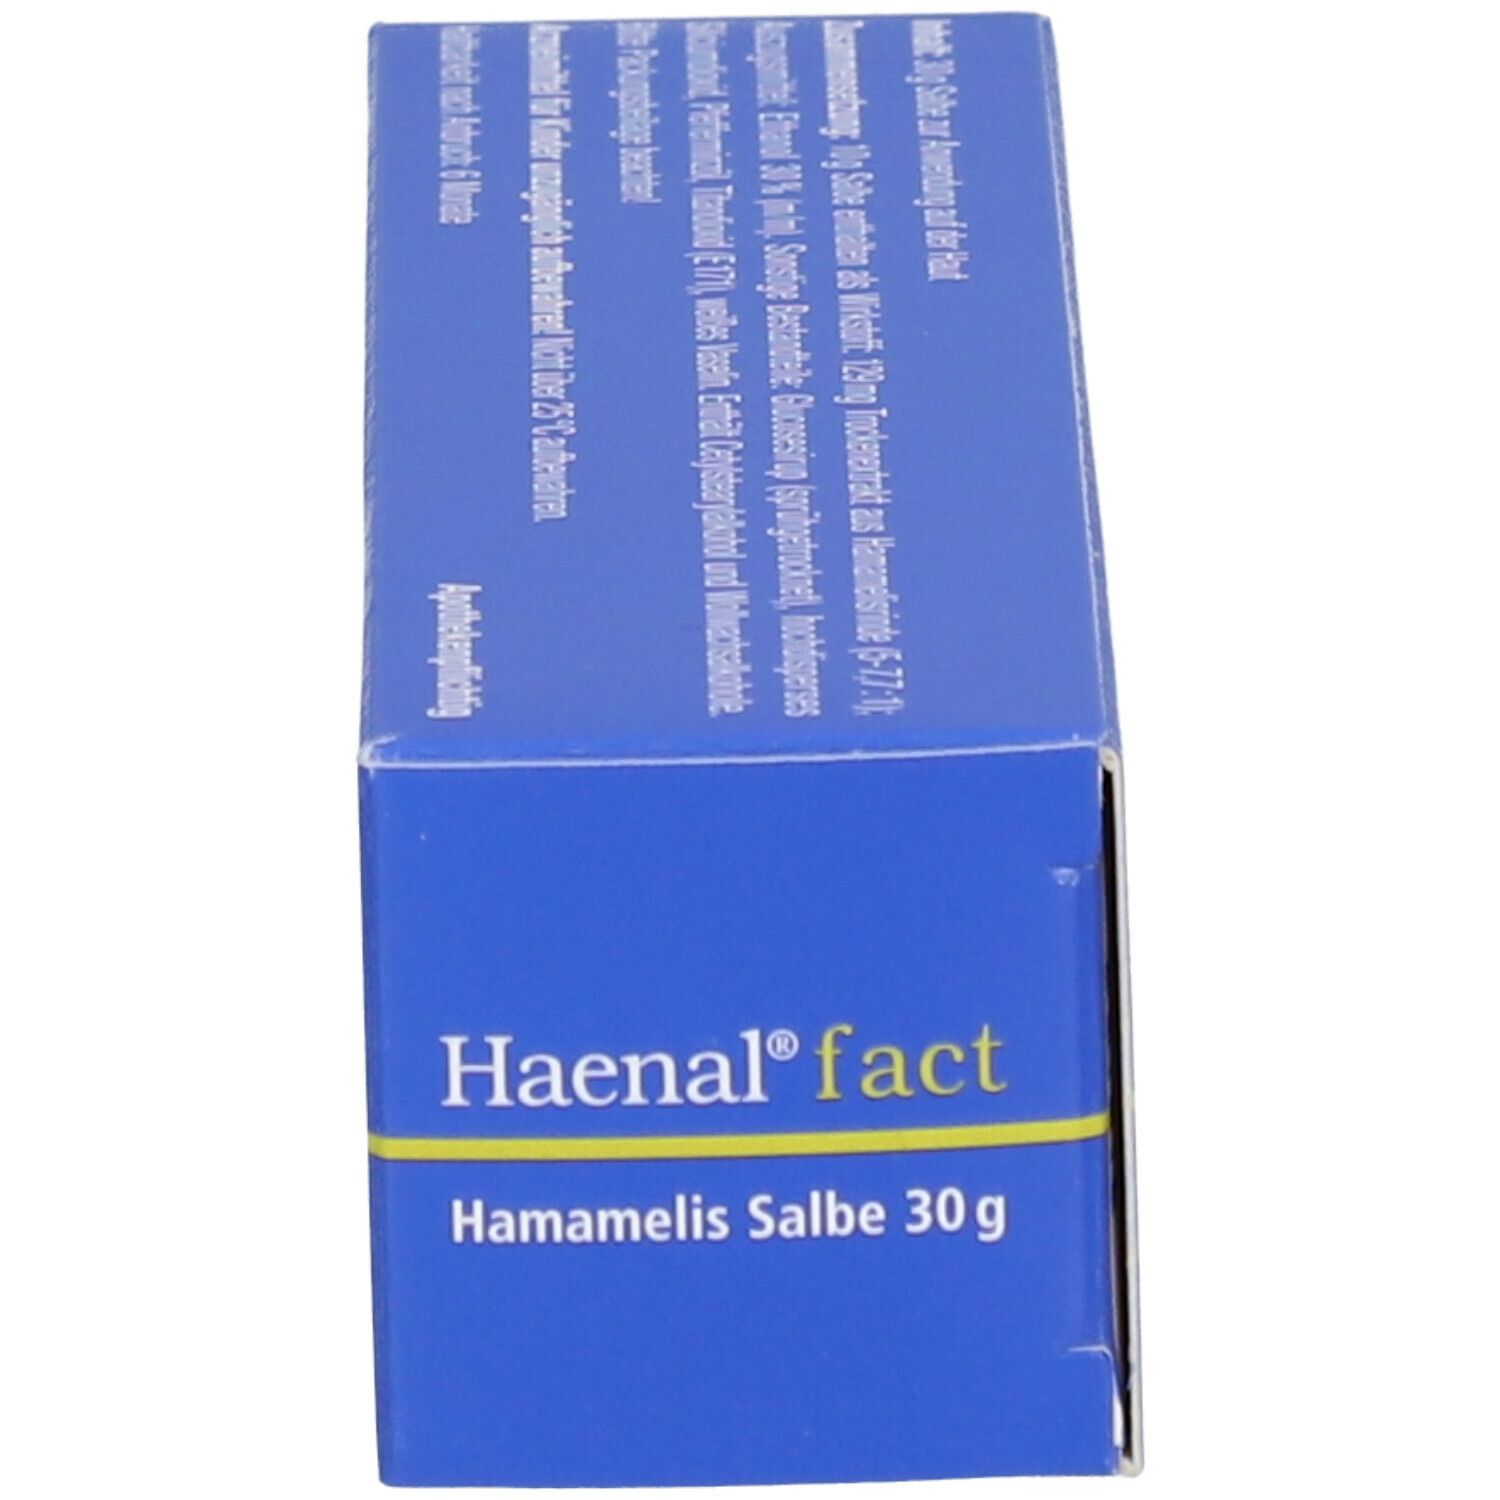 Haenal® fact Hamamelis Salbe